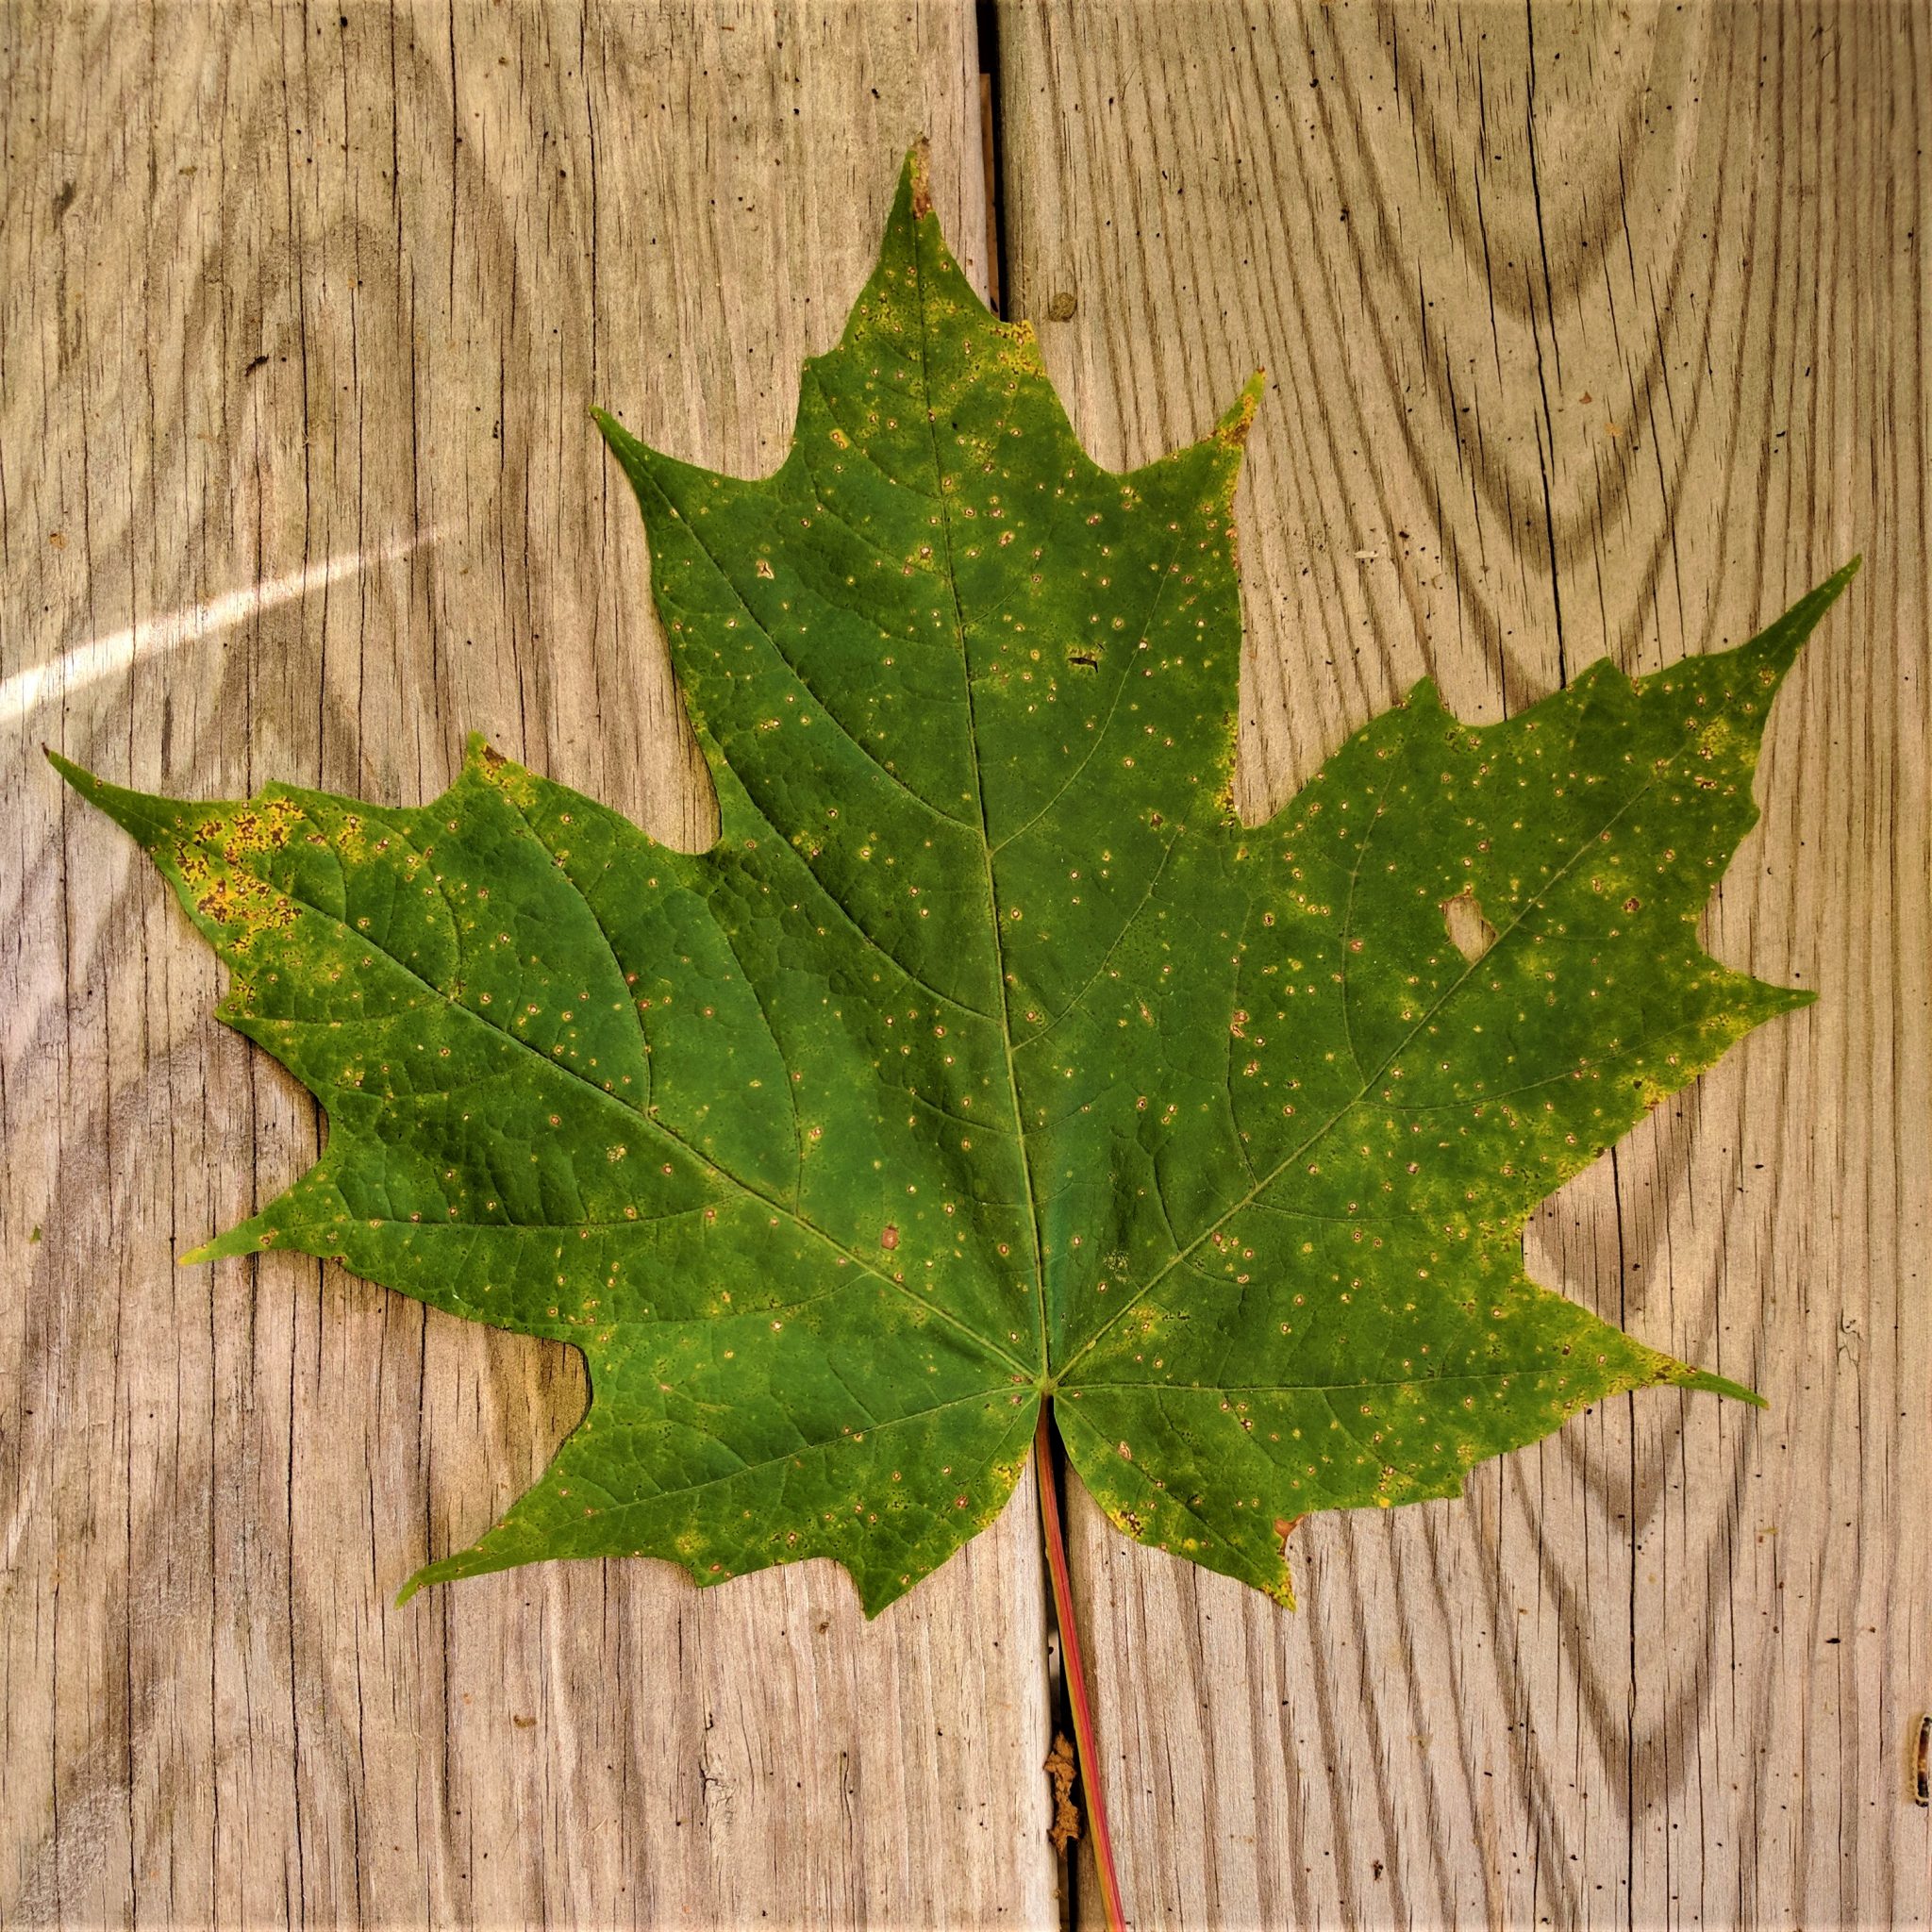 sugar maple leaf cross section